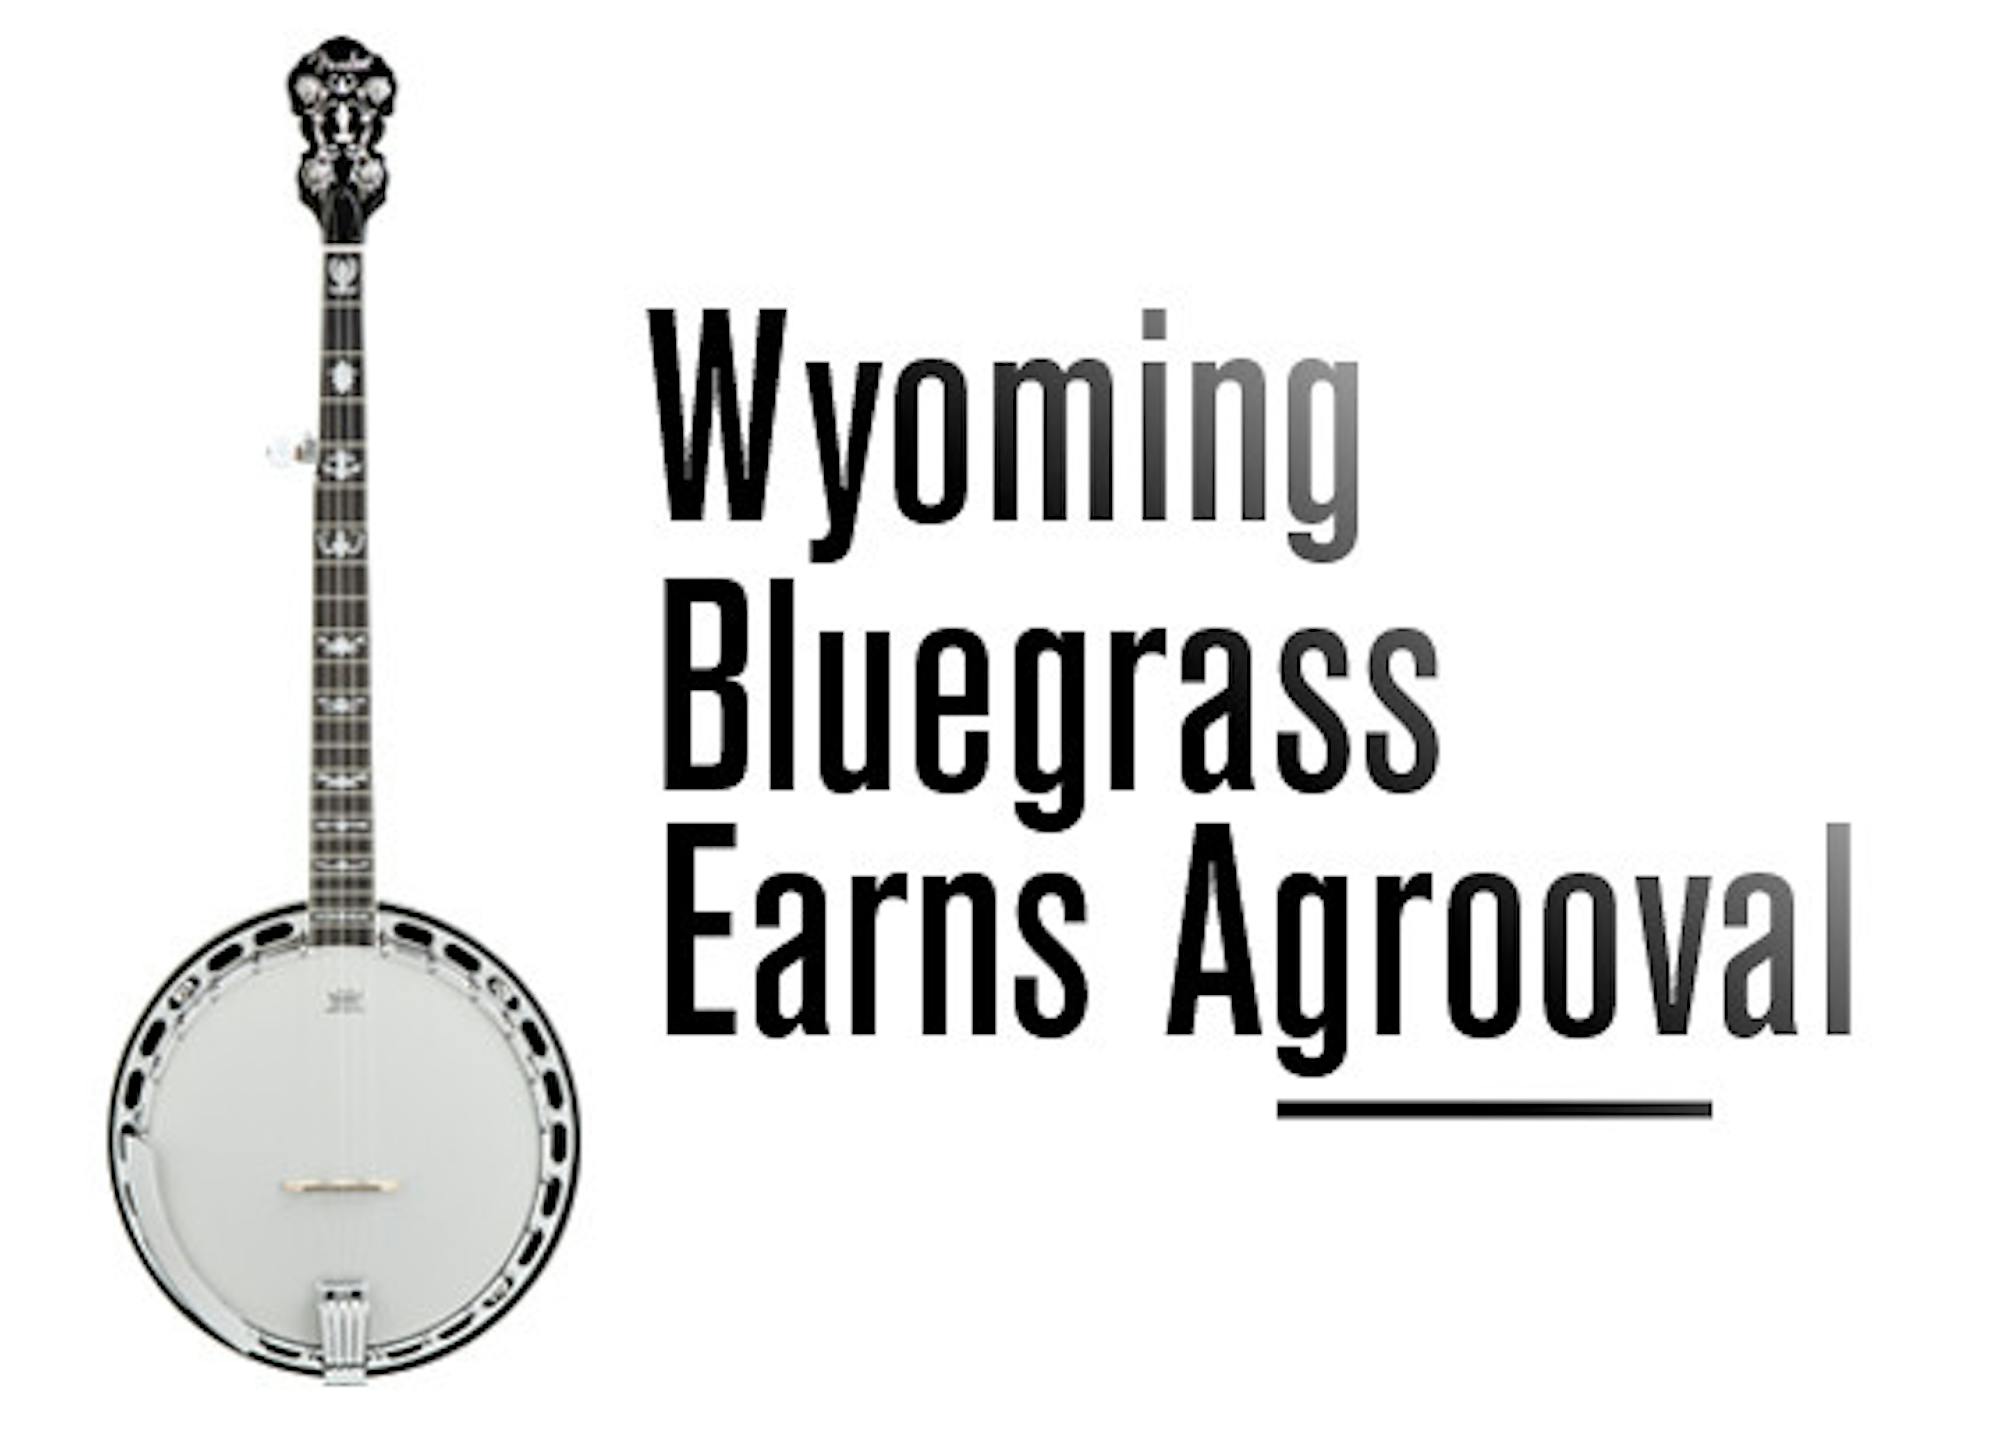 web_graphics_wyoming bluegrass_8-28-2014